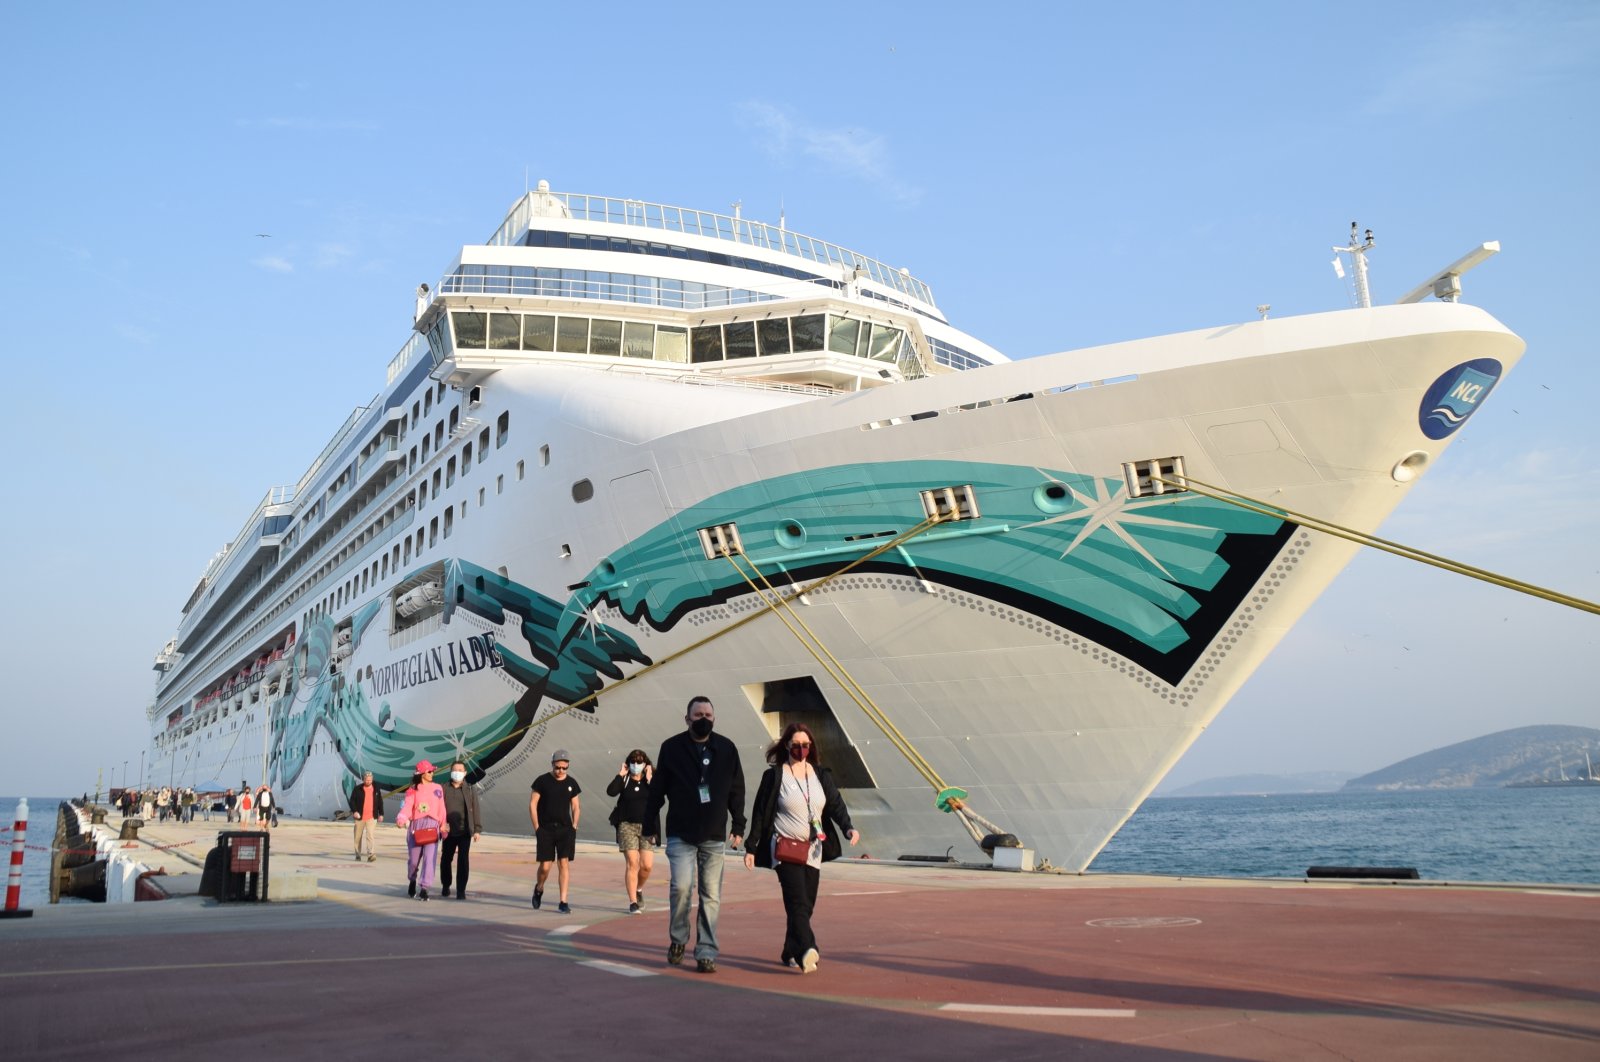 Tourists get off cruise ships at Ege Port in Kuşadası in Aydın province, southwestern Turkey, Nov. 20, 2021. (AA Photo)